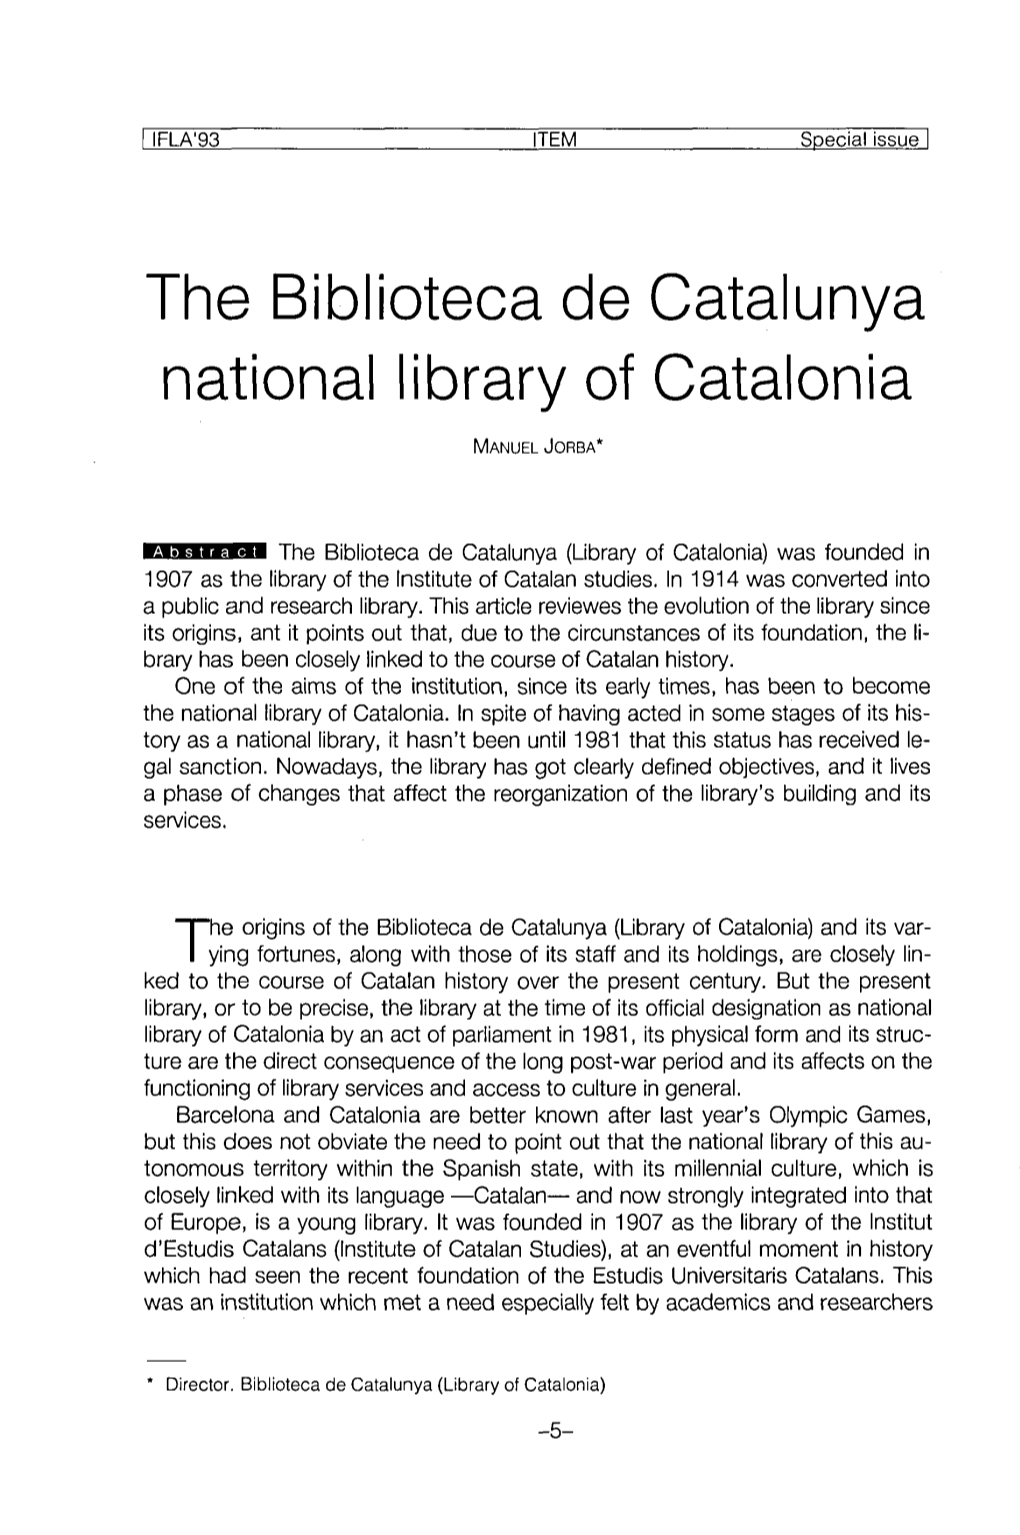 The Biblioteca De Catalunya National Library of Catalonia